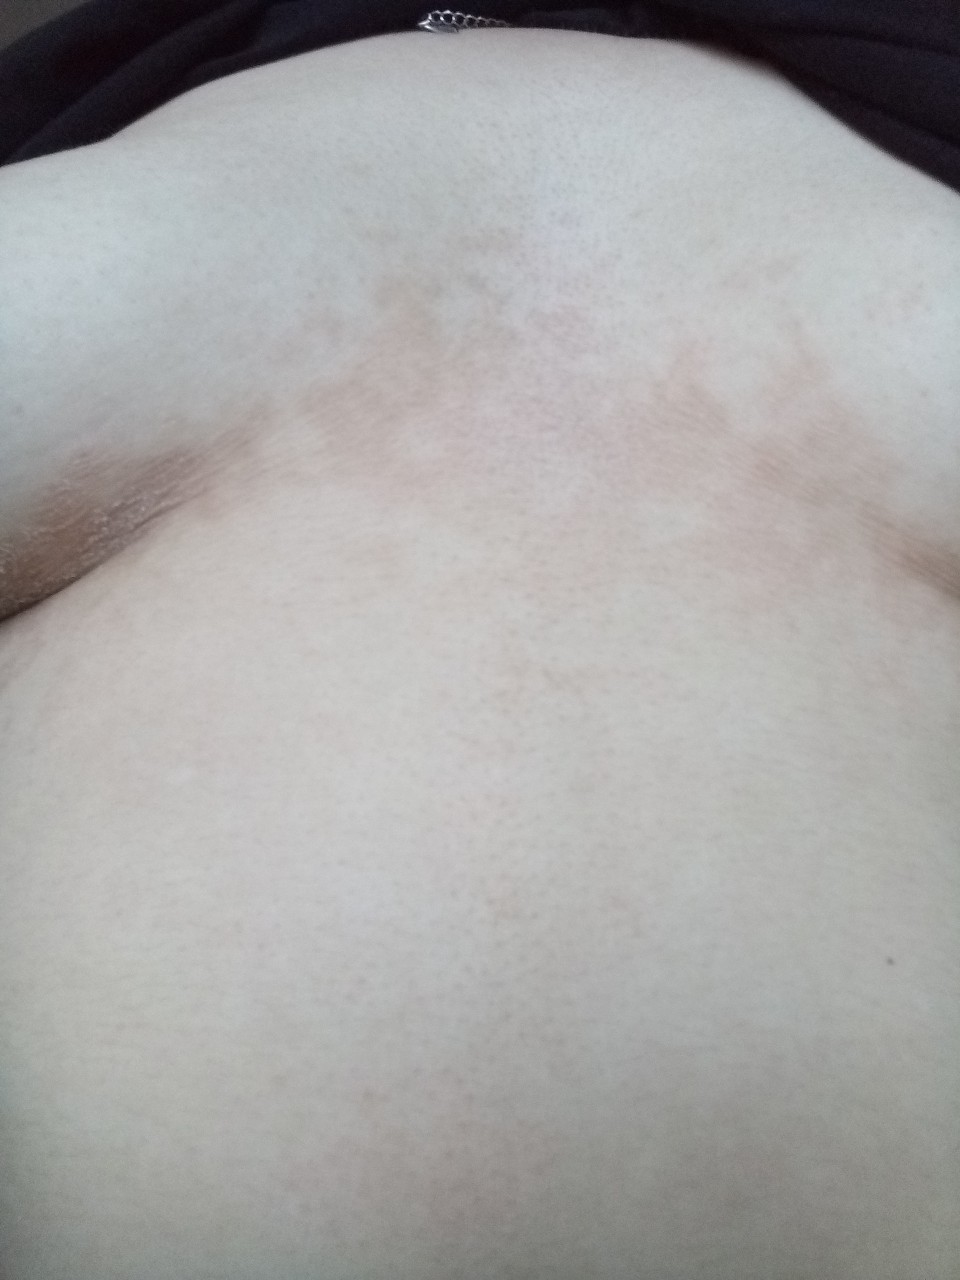 шелушение кожи груди у мужчин фото 97